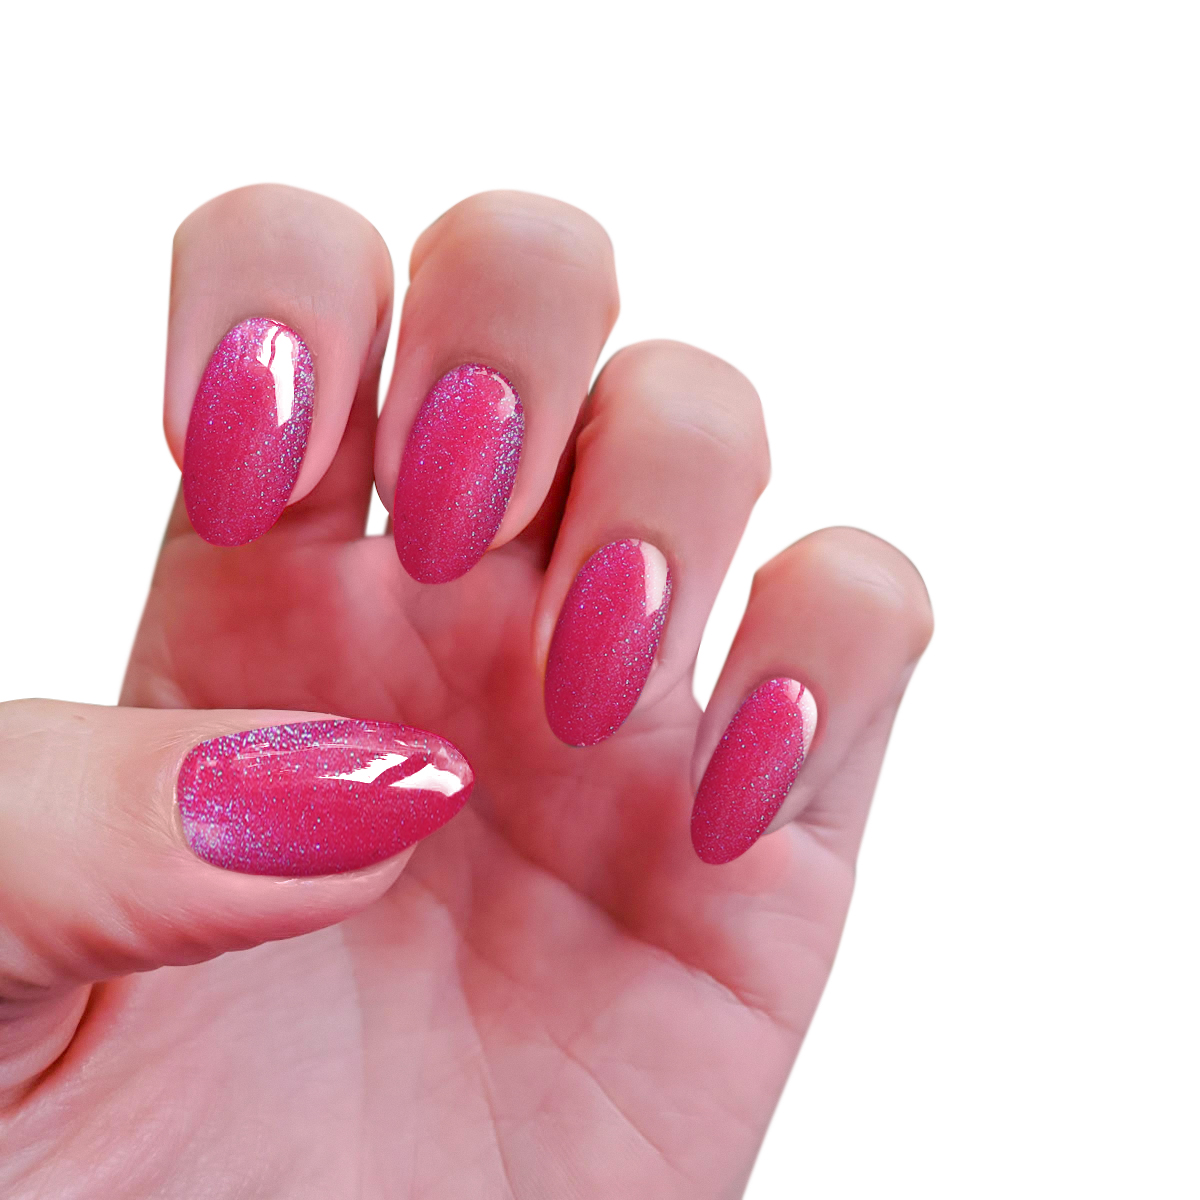 Iridescent Pink #42 - One Step Gel Polish